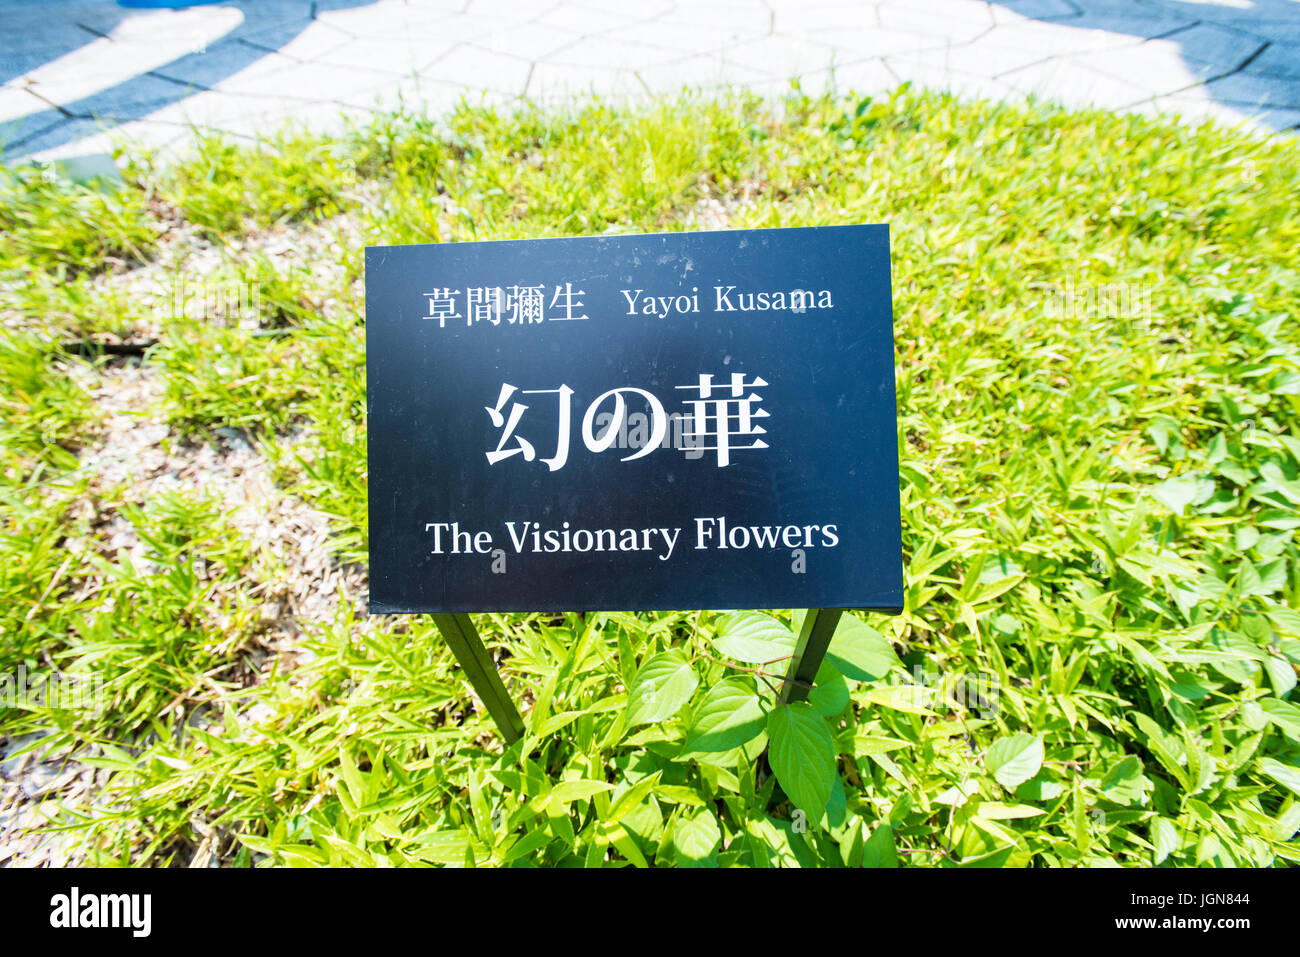 The Visionary Flowers, an environmental art installation by Yayoi Kusama at The Matsumoto City Museum of Art. Stock Photo